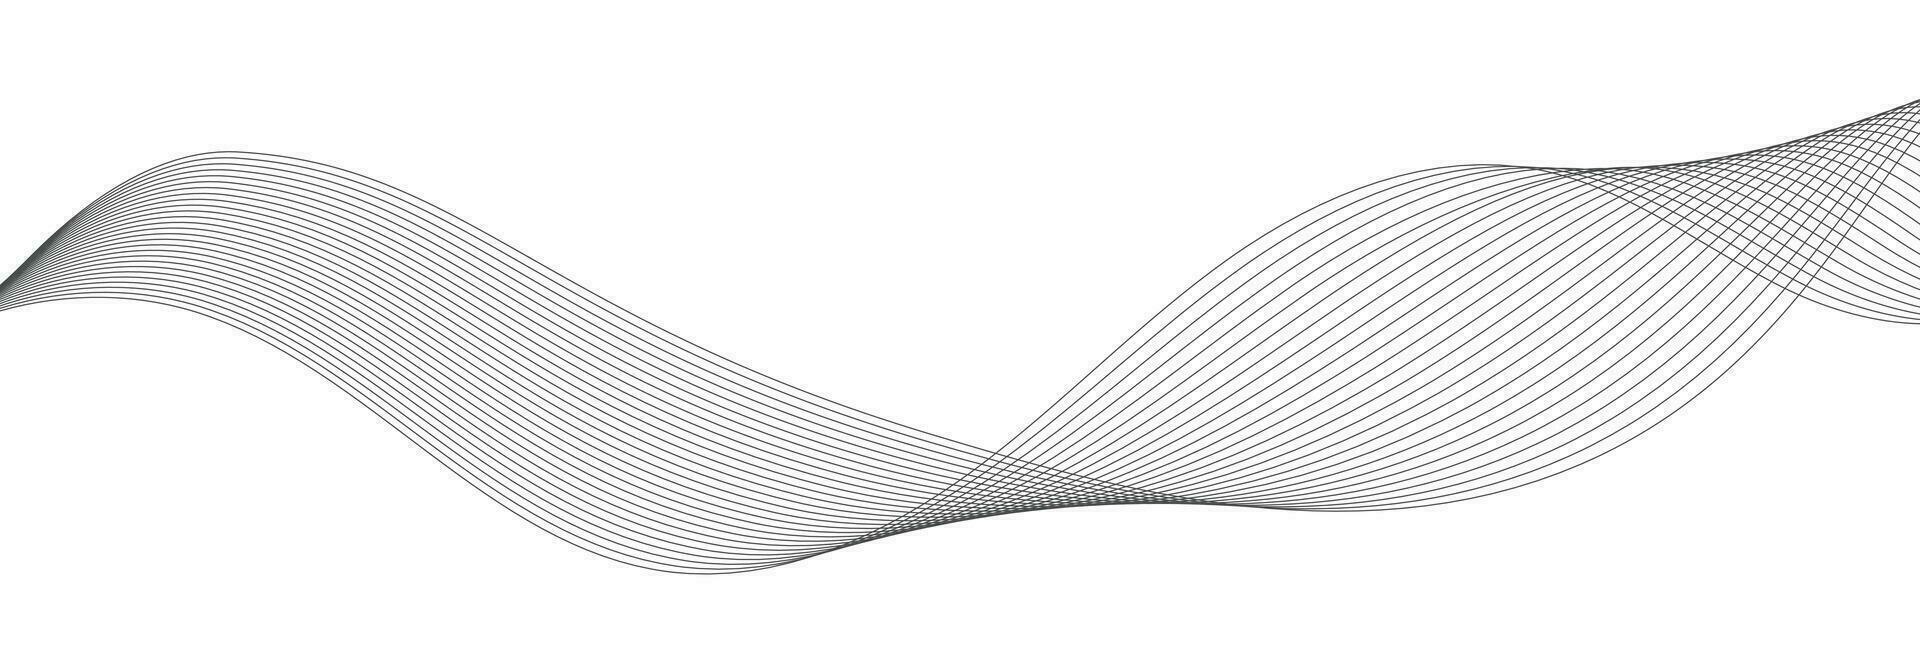 modern vektor bakgrund med svart vågig rader.